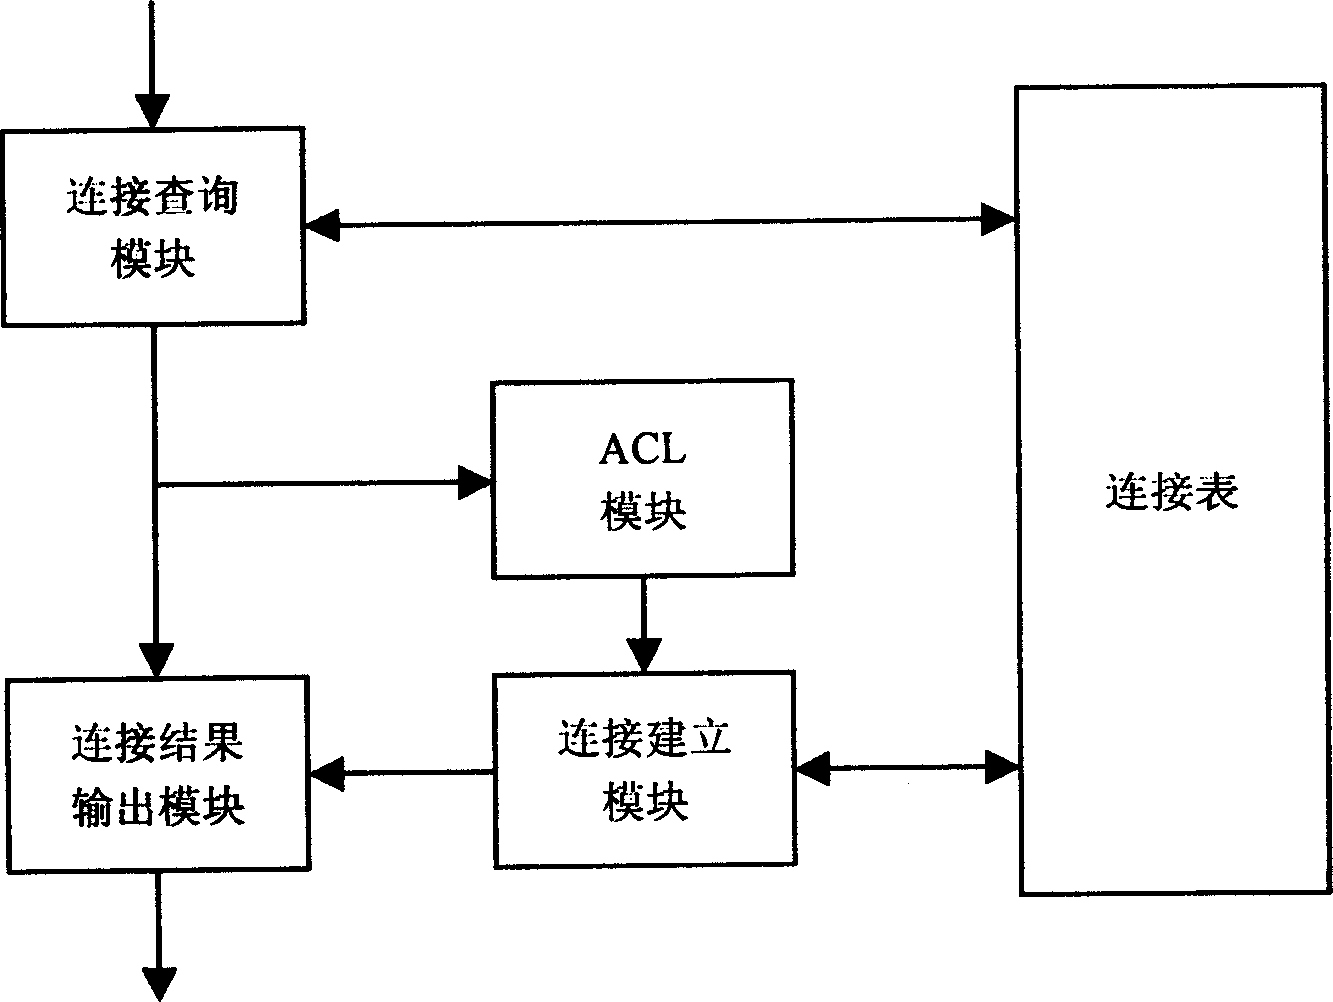 Establishment of TCP data flow connection by hardware